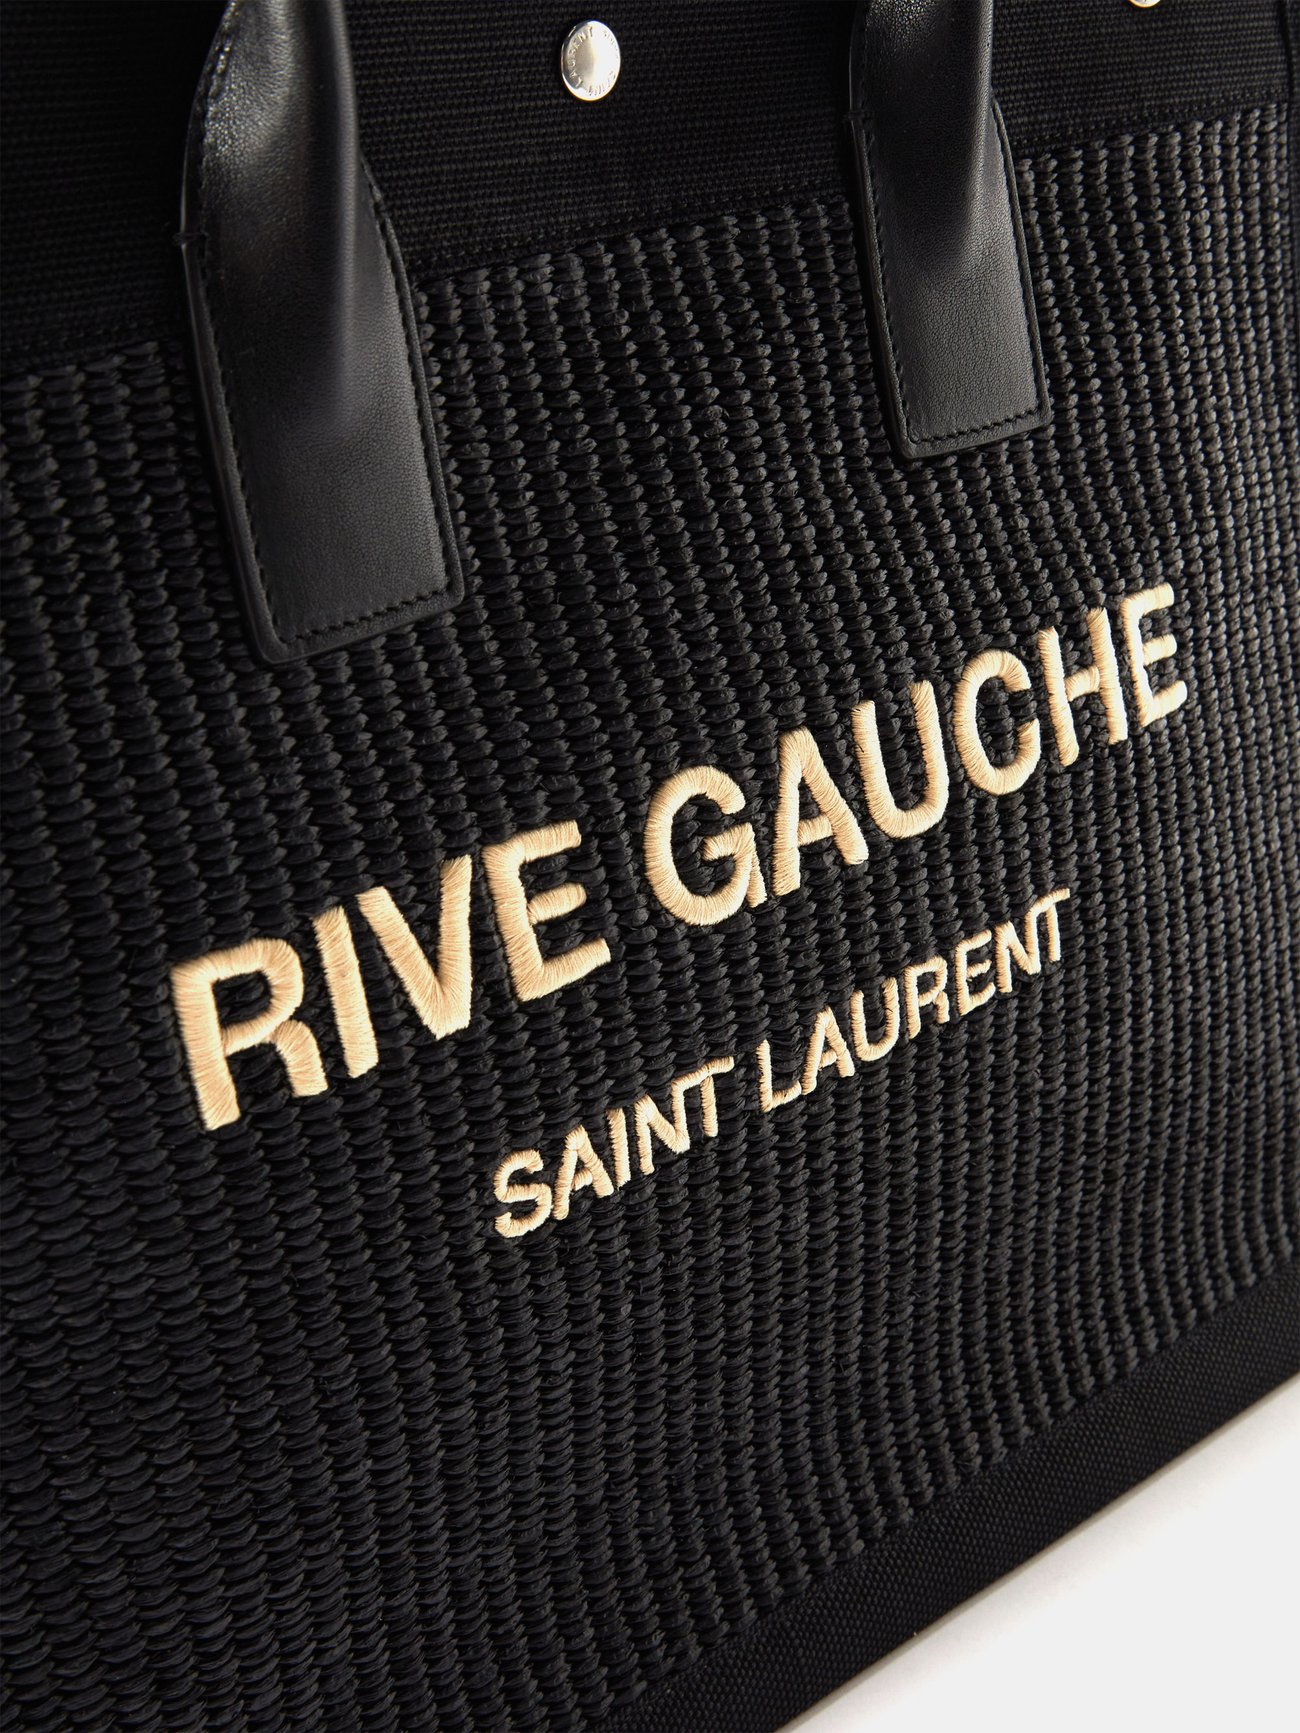 Saint Laurent Rive Gauche Small Tote Bag in Raffia and Leather - Black - Women